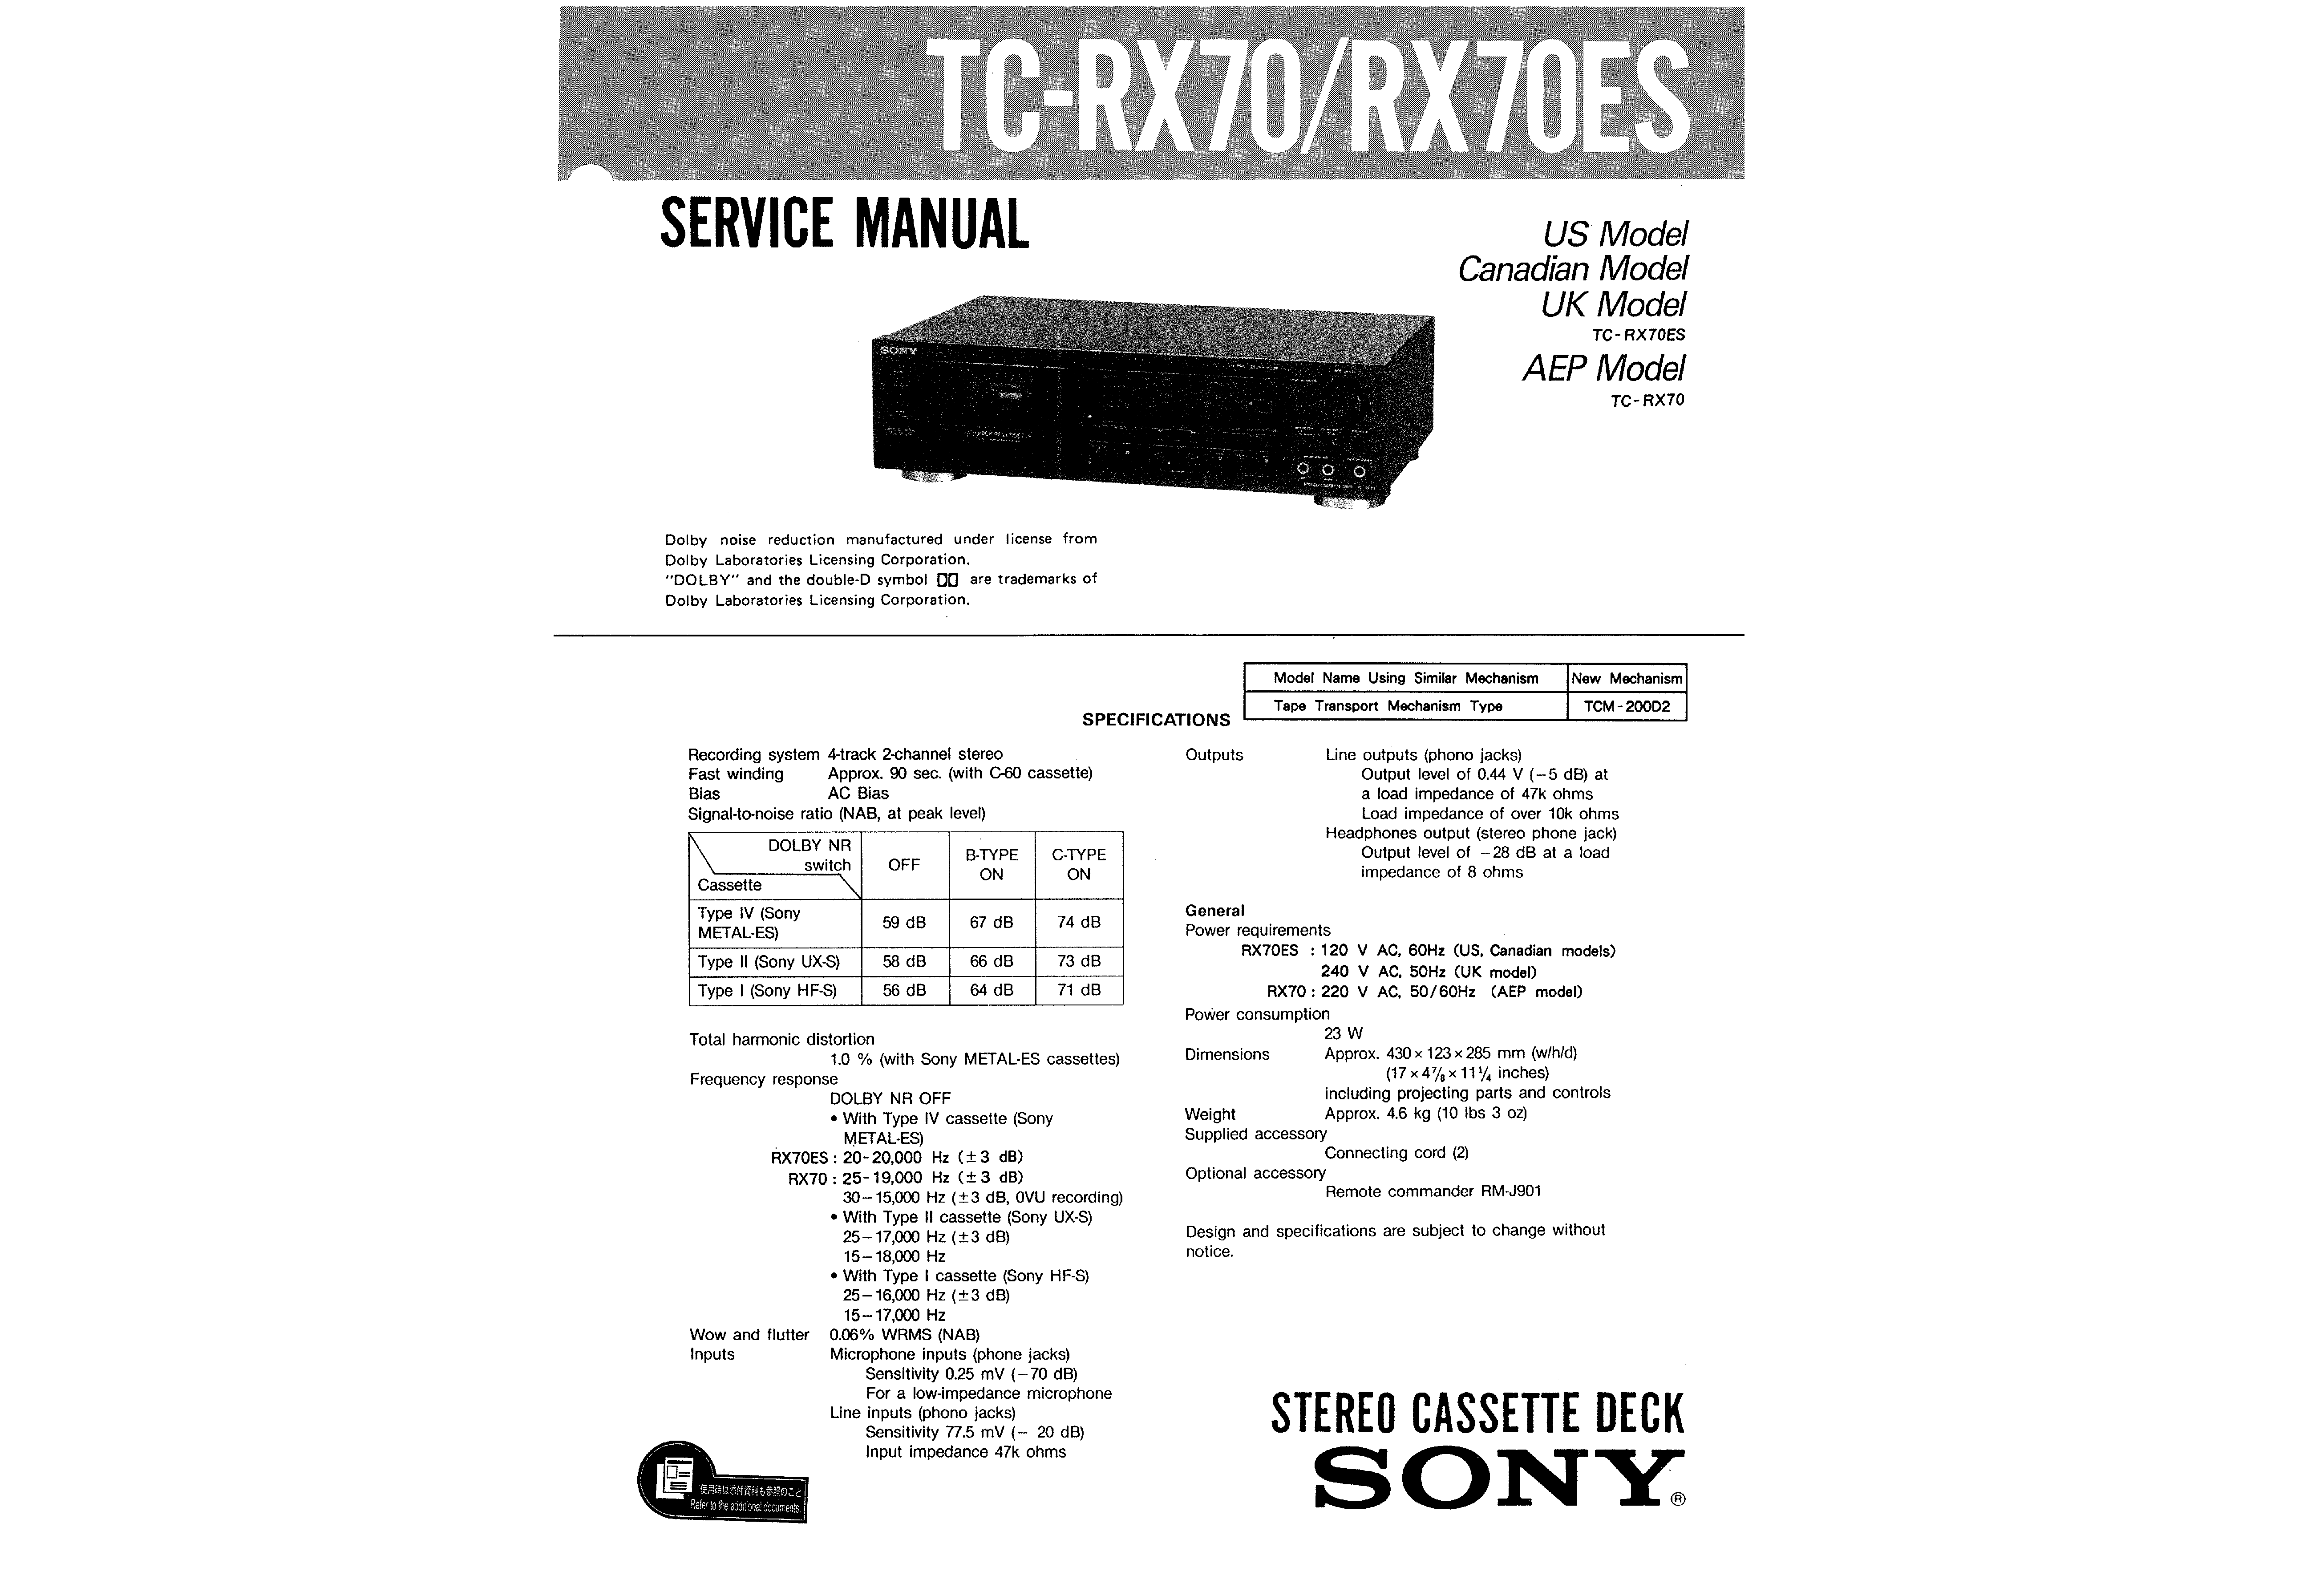 SONY TCRX70 - Service Manual Immediate 